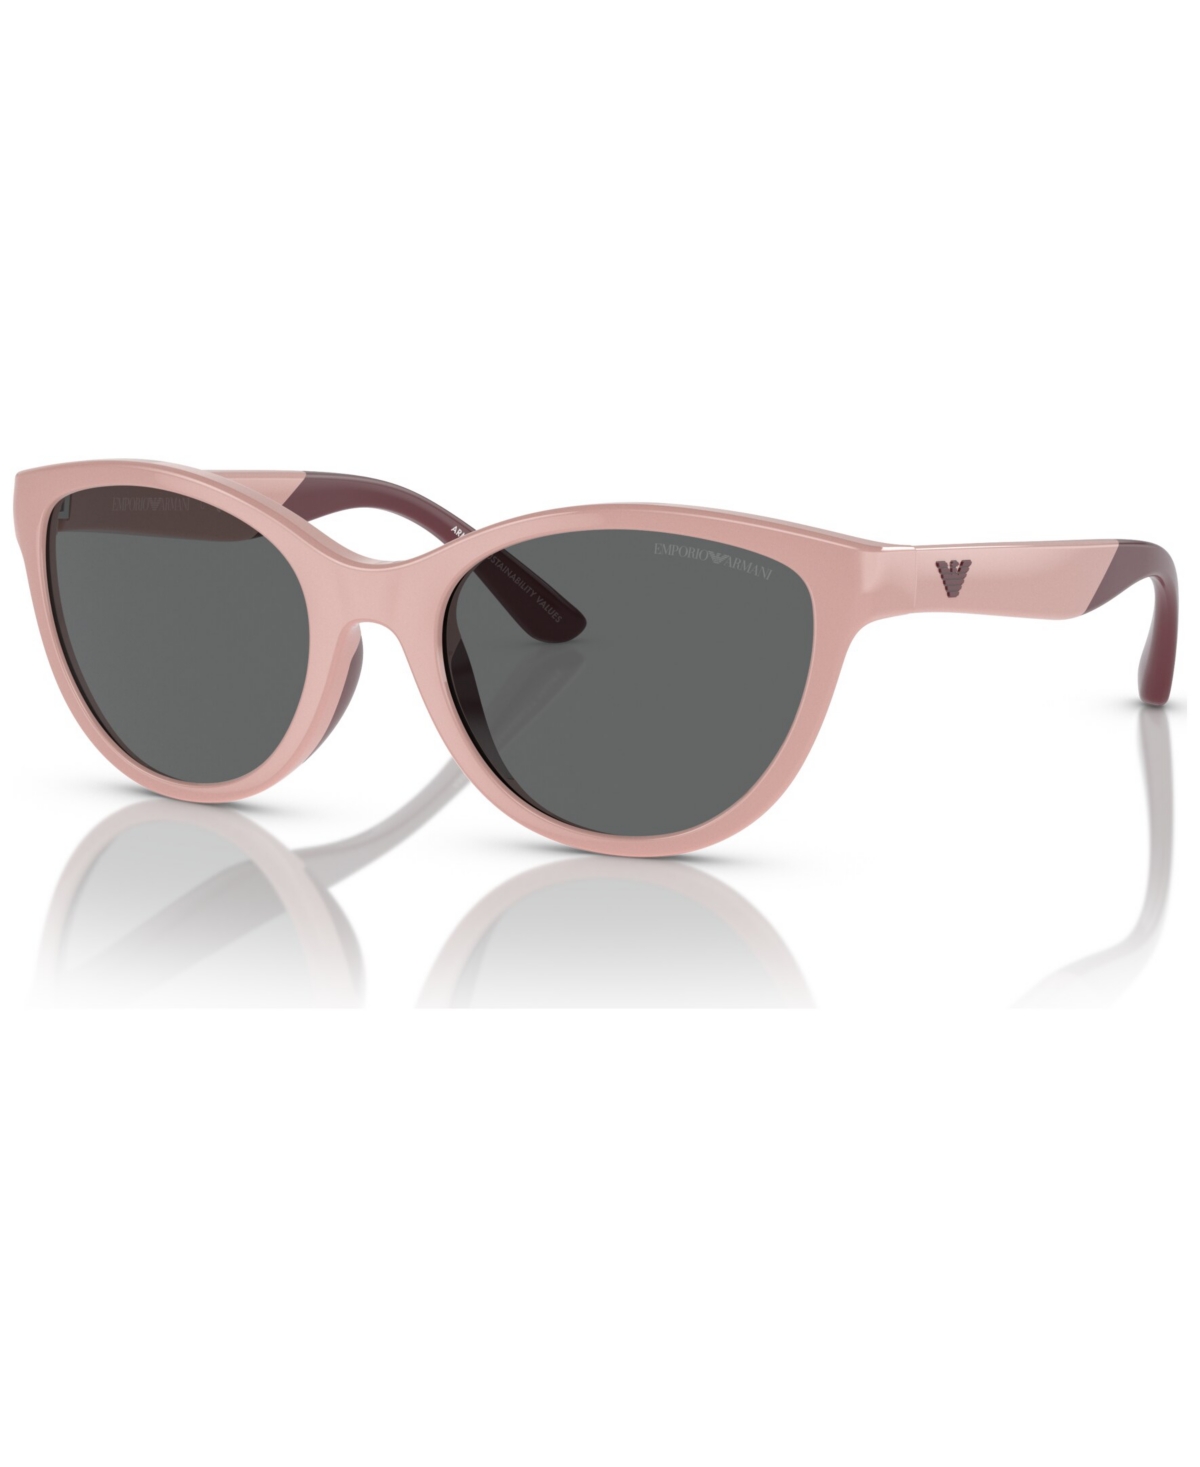 Emporio Armani Kids Sunglasses Ek4003 In Shiny Pink